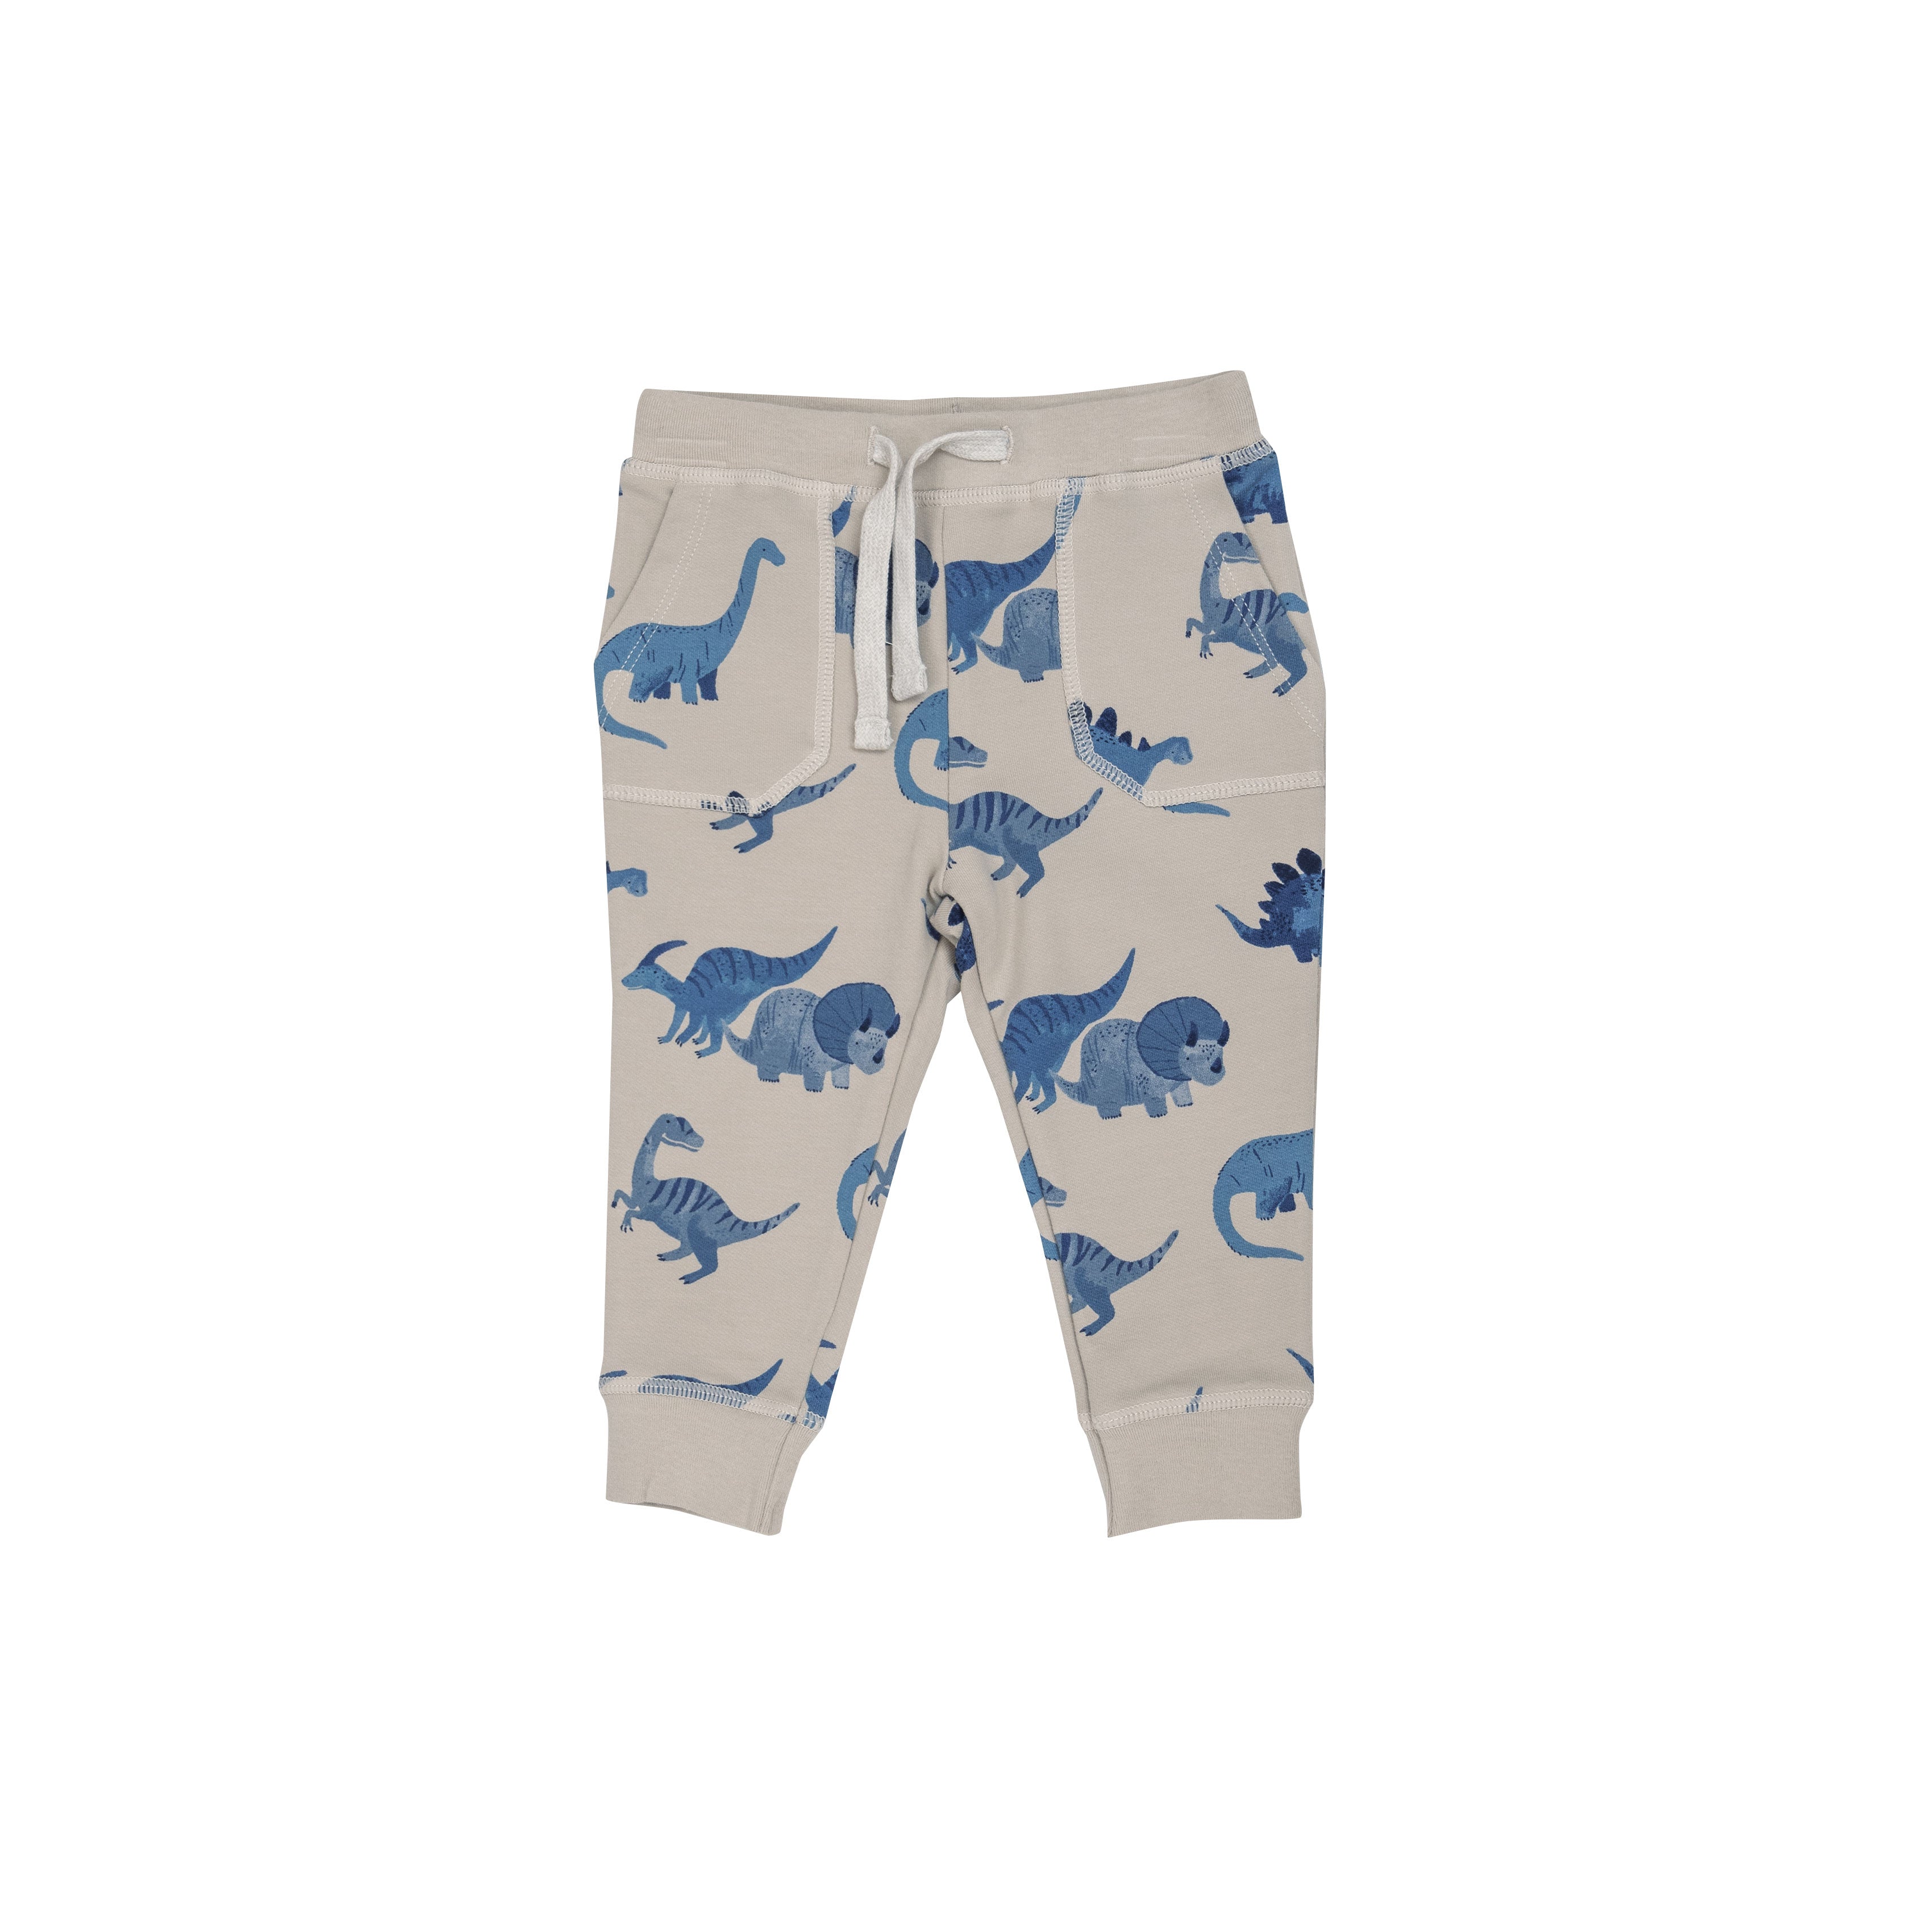 grey sweatpants with drawstring waist and blue dinosaur print